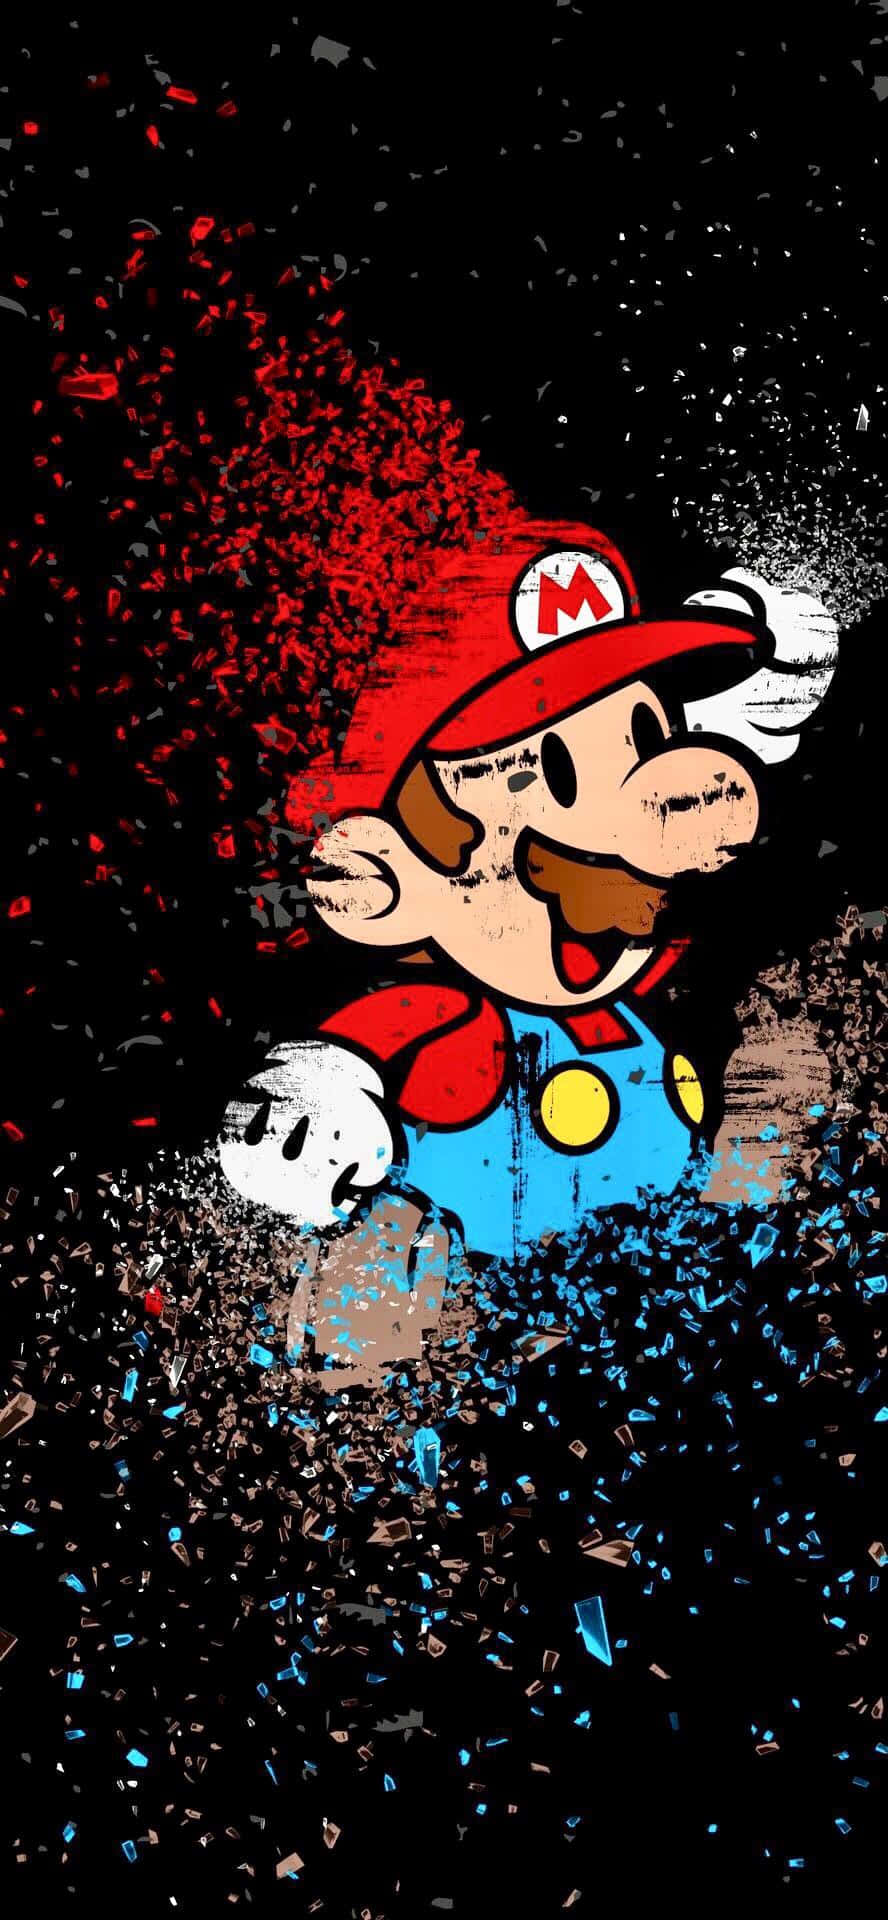 Cool Mario, the classic Super Mario Bros mascot. Wallpaper